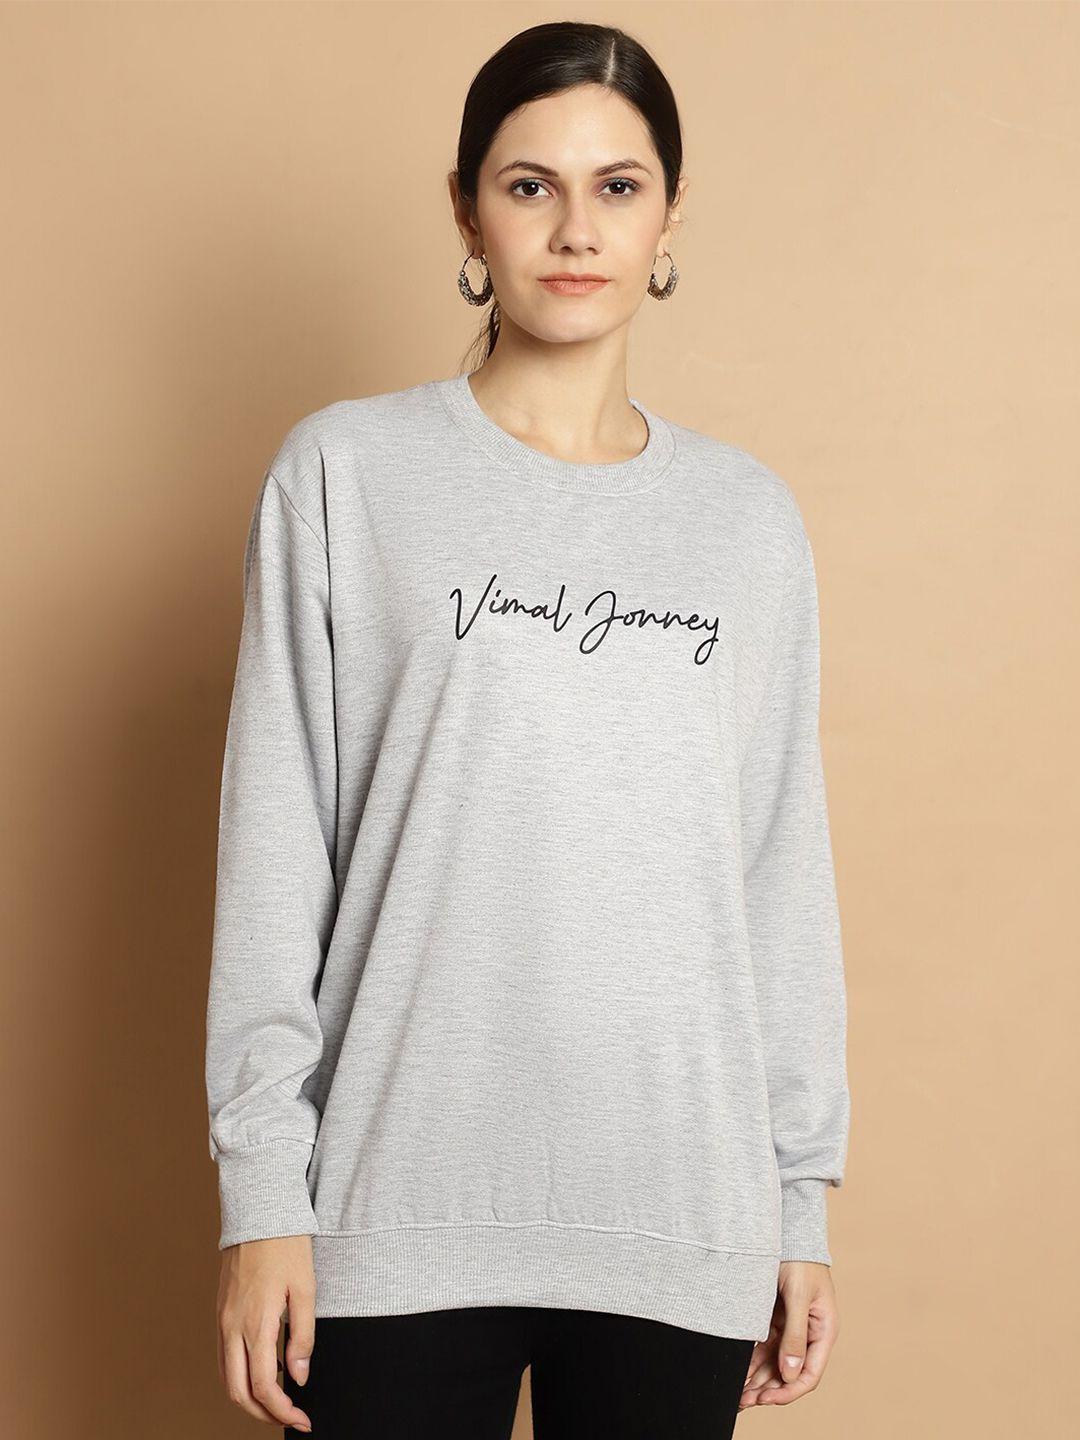 vimal jonney typography printed pullover fleece sweatshirt